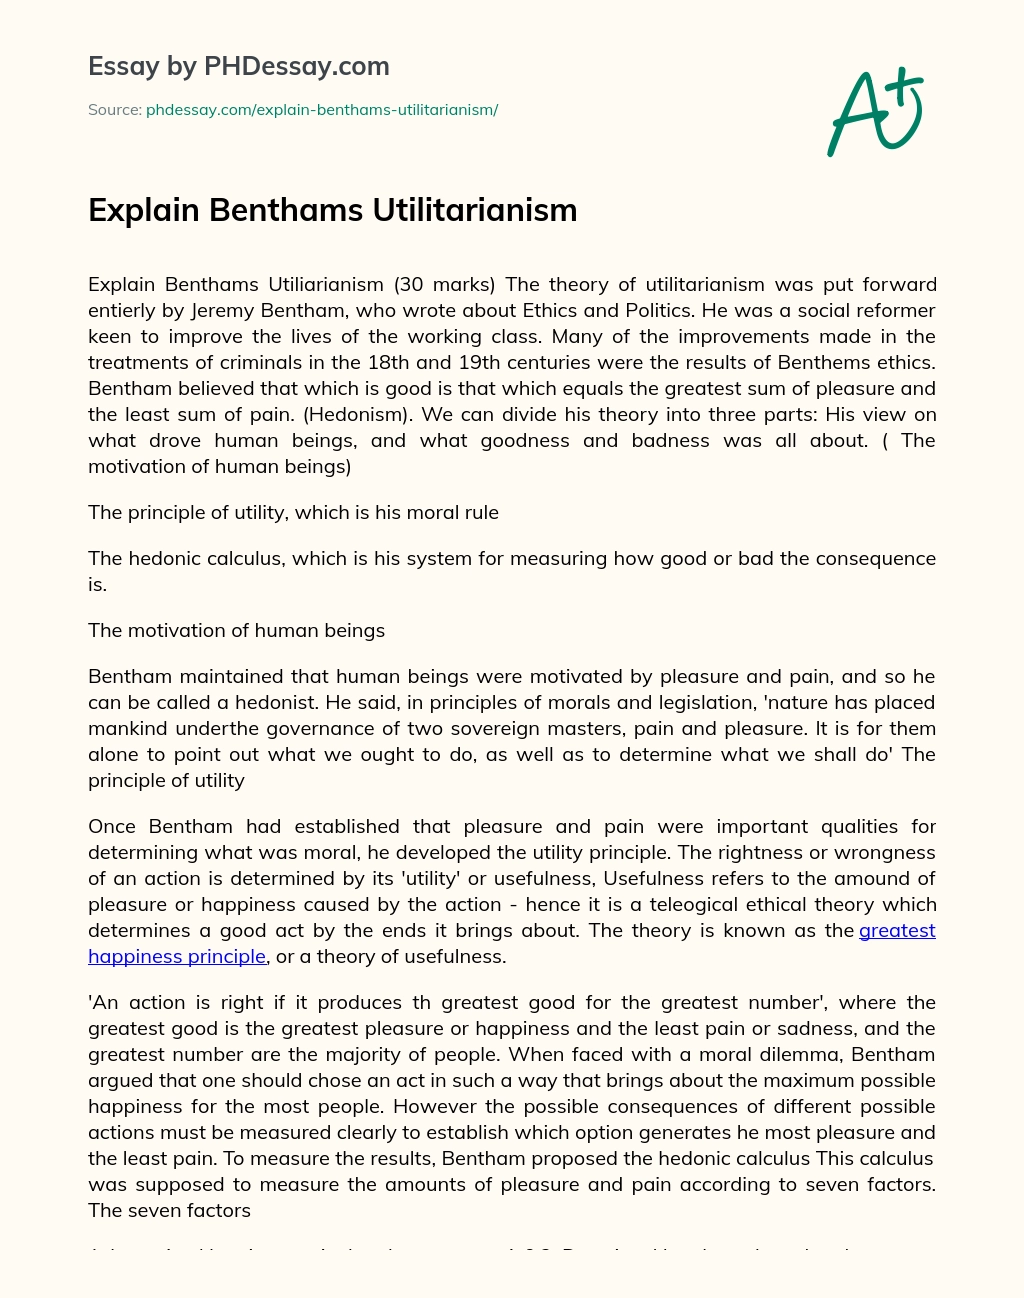 Explain Benthams Utilitarianism essay